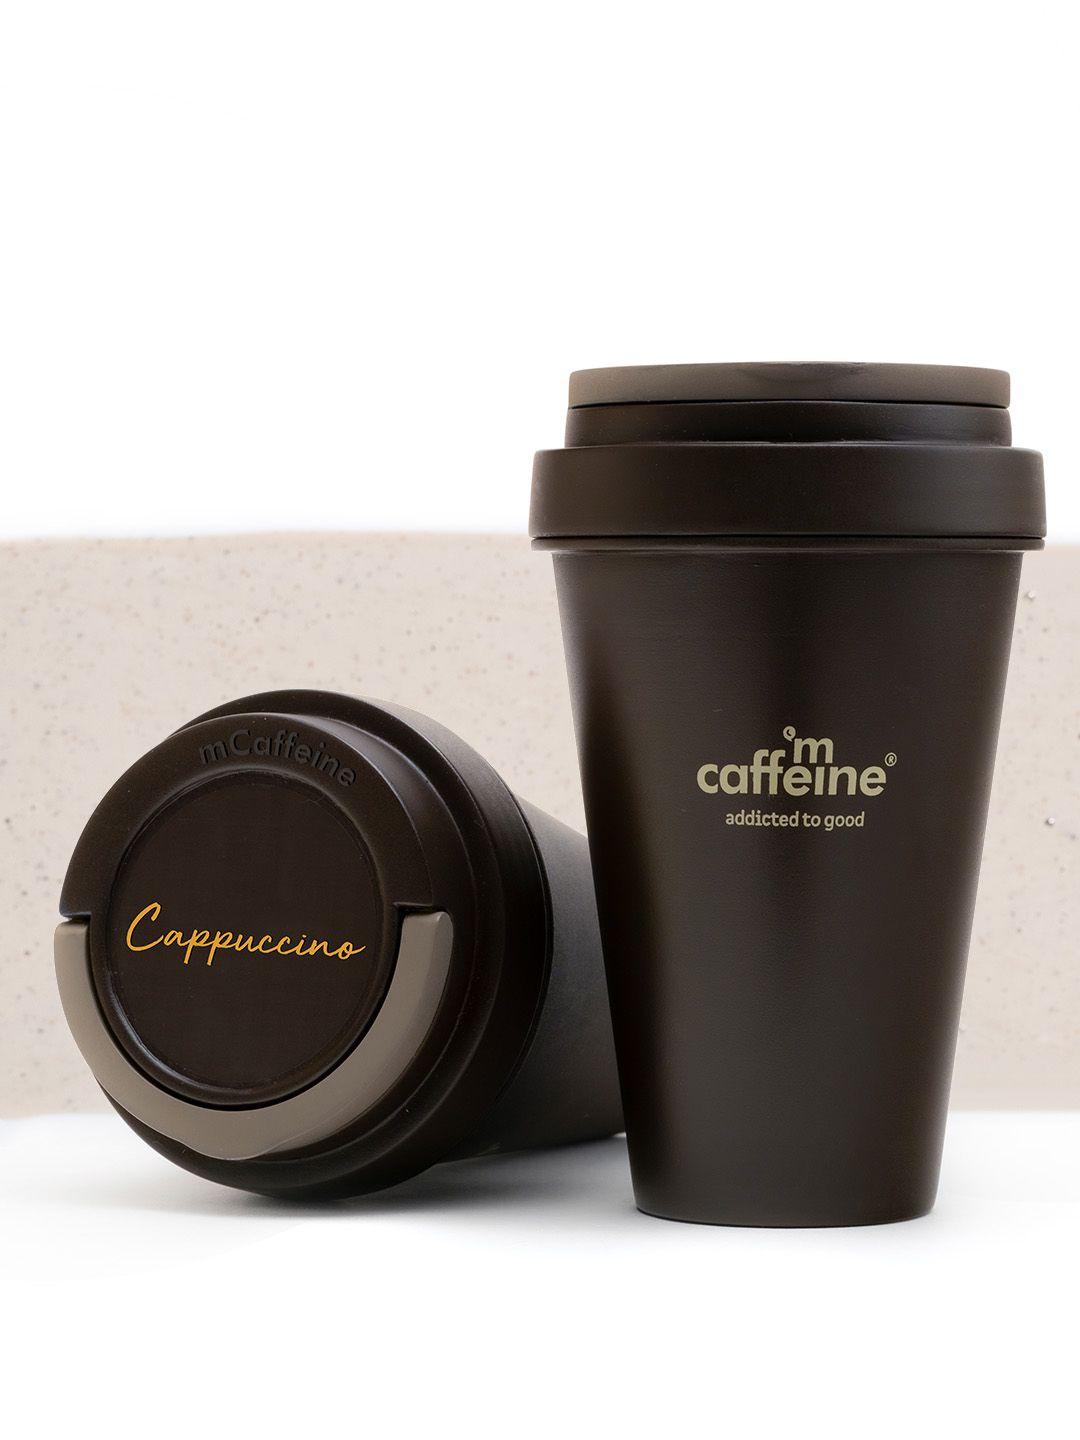 mcaffeine sustainable moisturizing cappuccino body wash with coffee scrub for gentle skin exfoliation